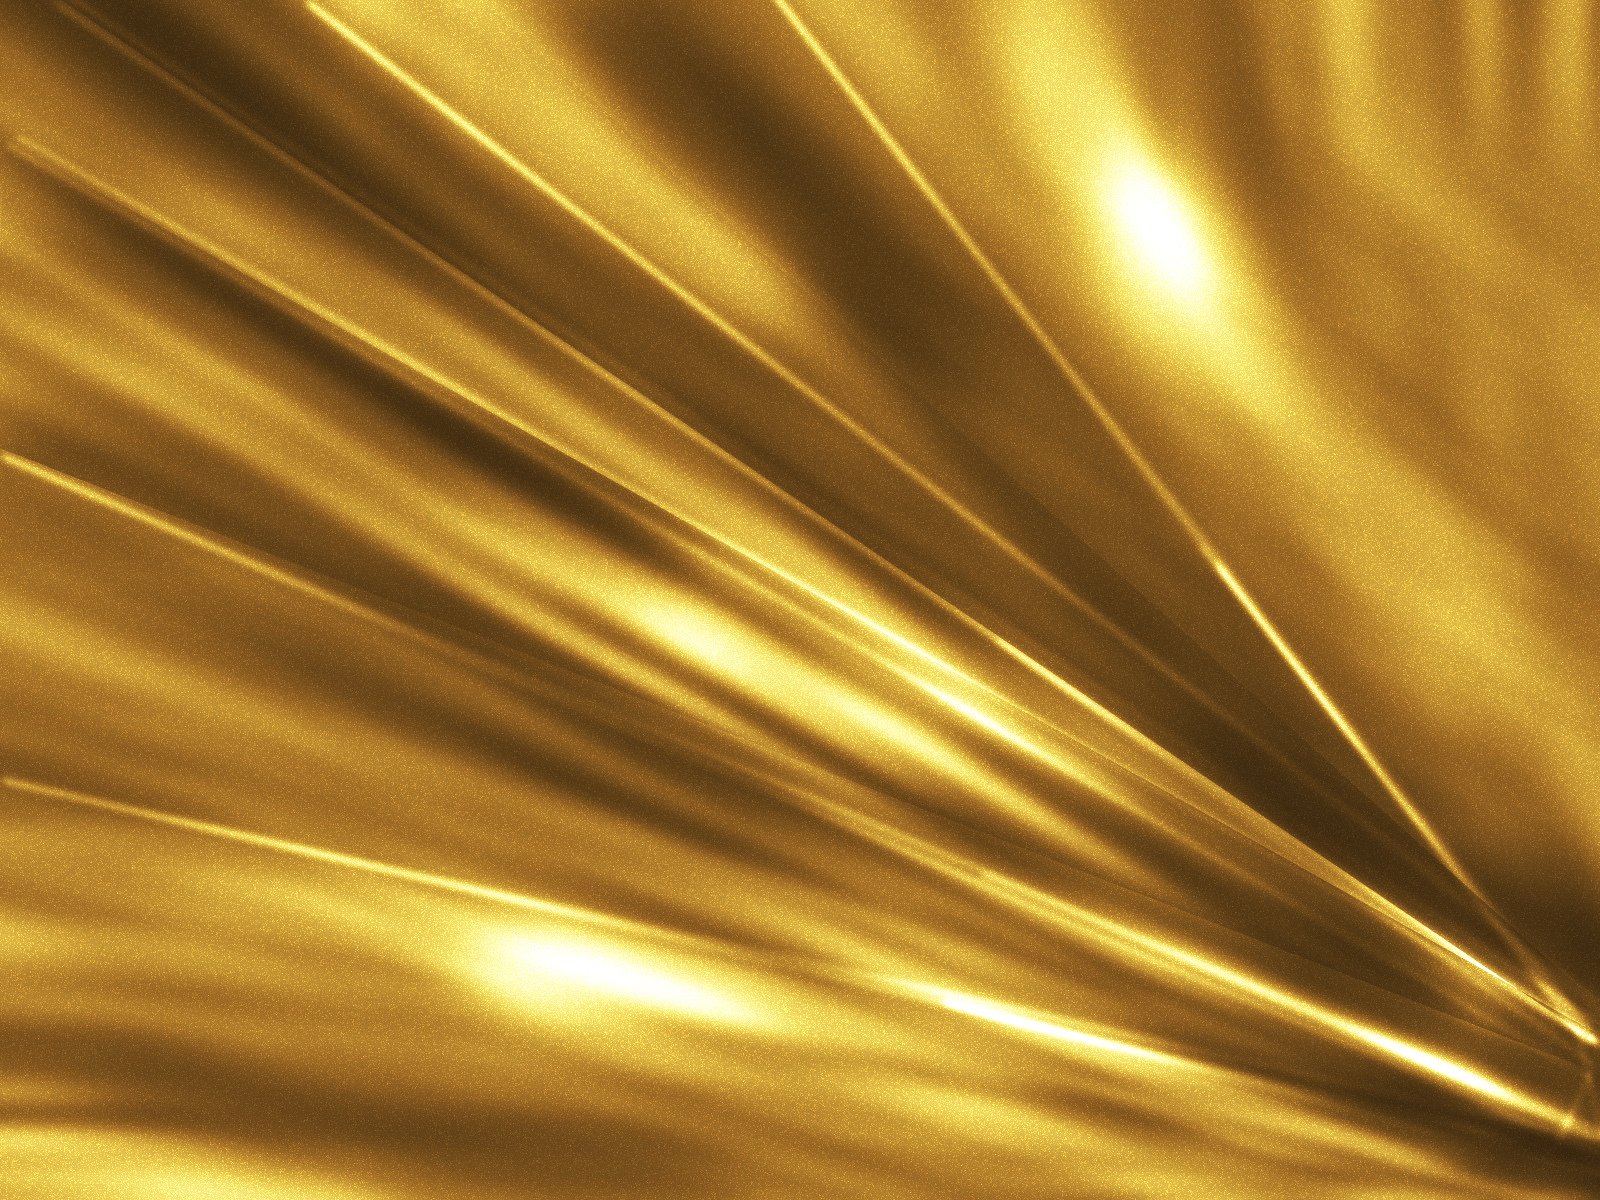 40 HD Gold Wallpaper Backgrounds For Desktop Download 1600x1200